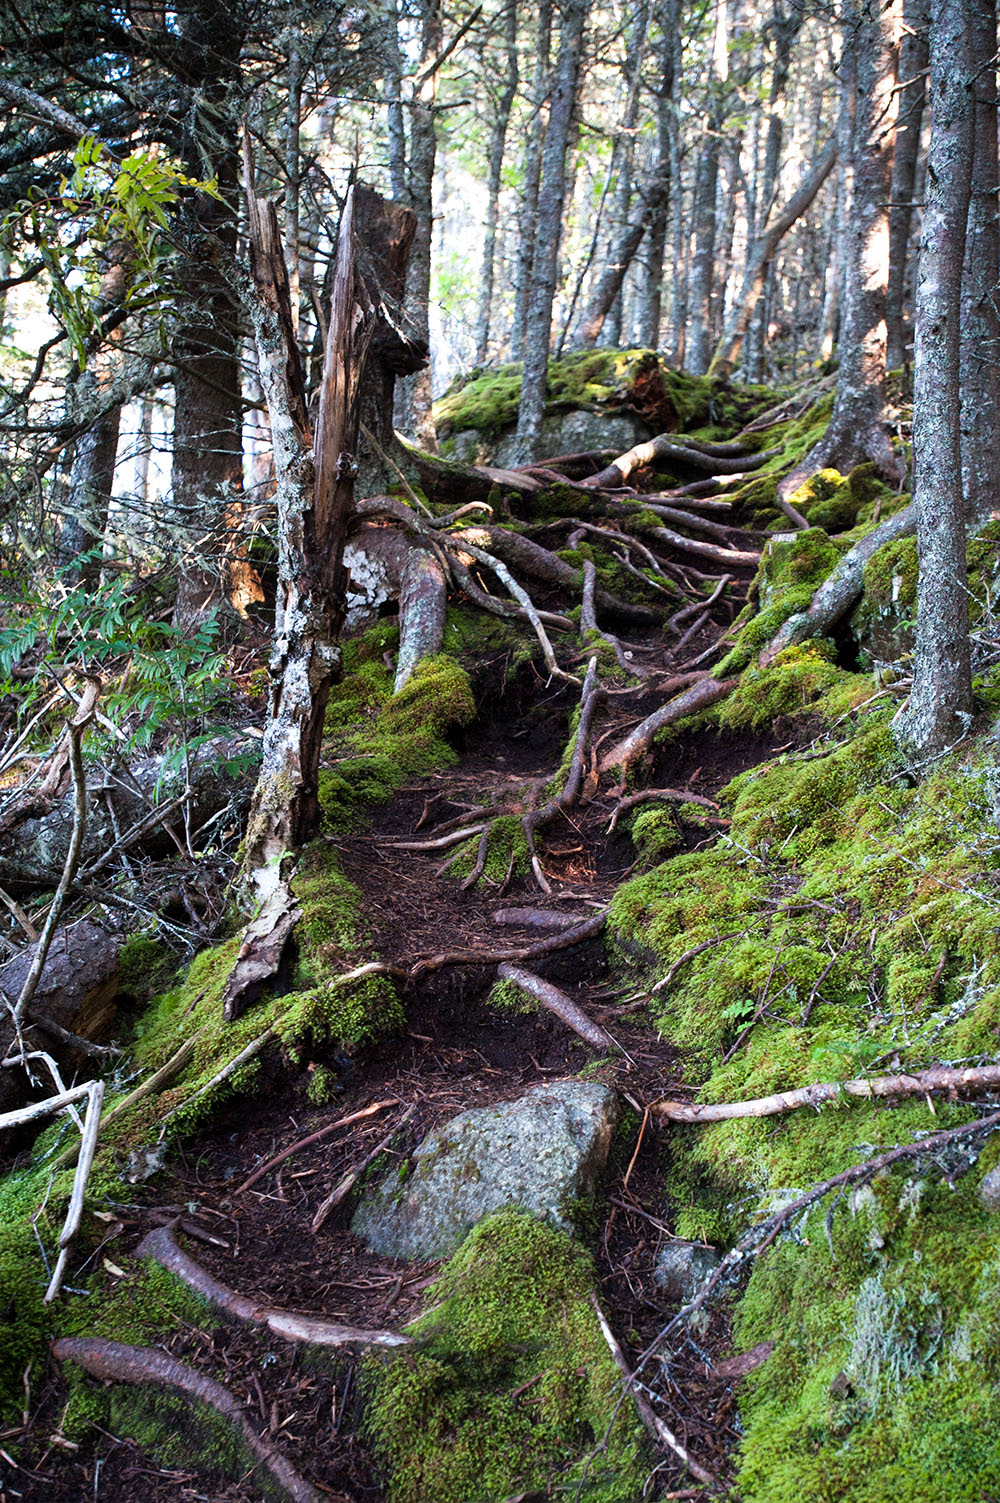 Western Head Reserve trail in Cutler, Maine.